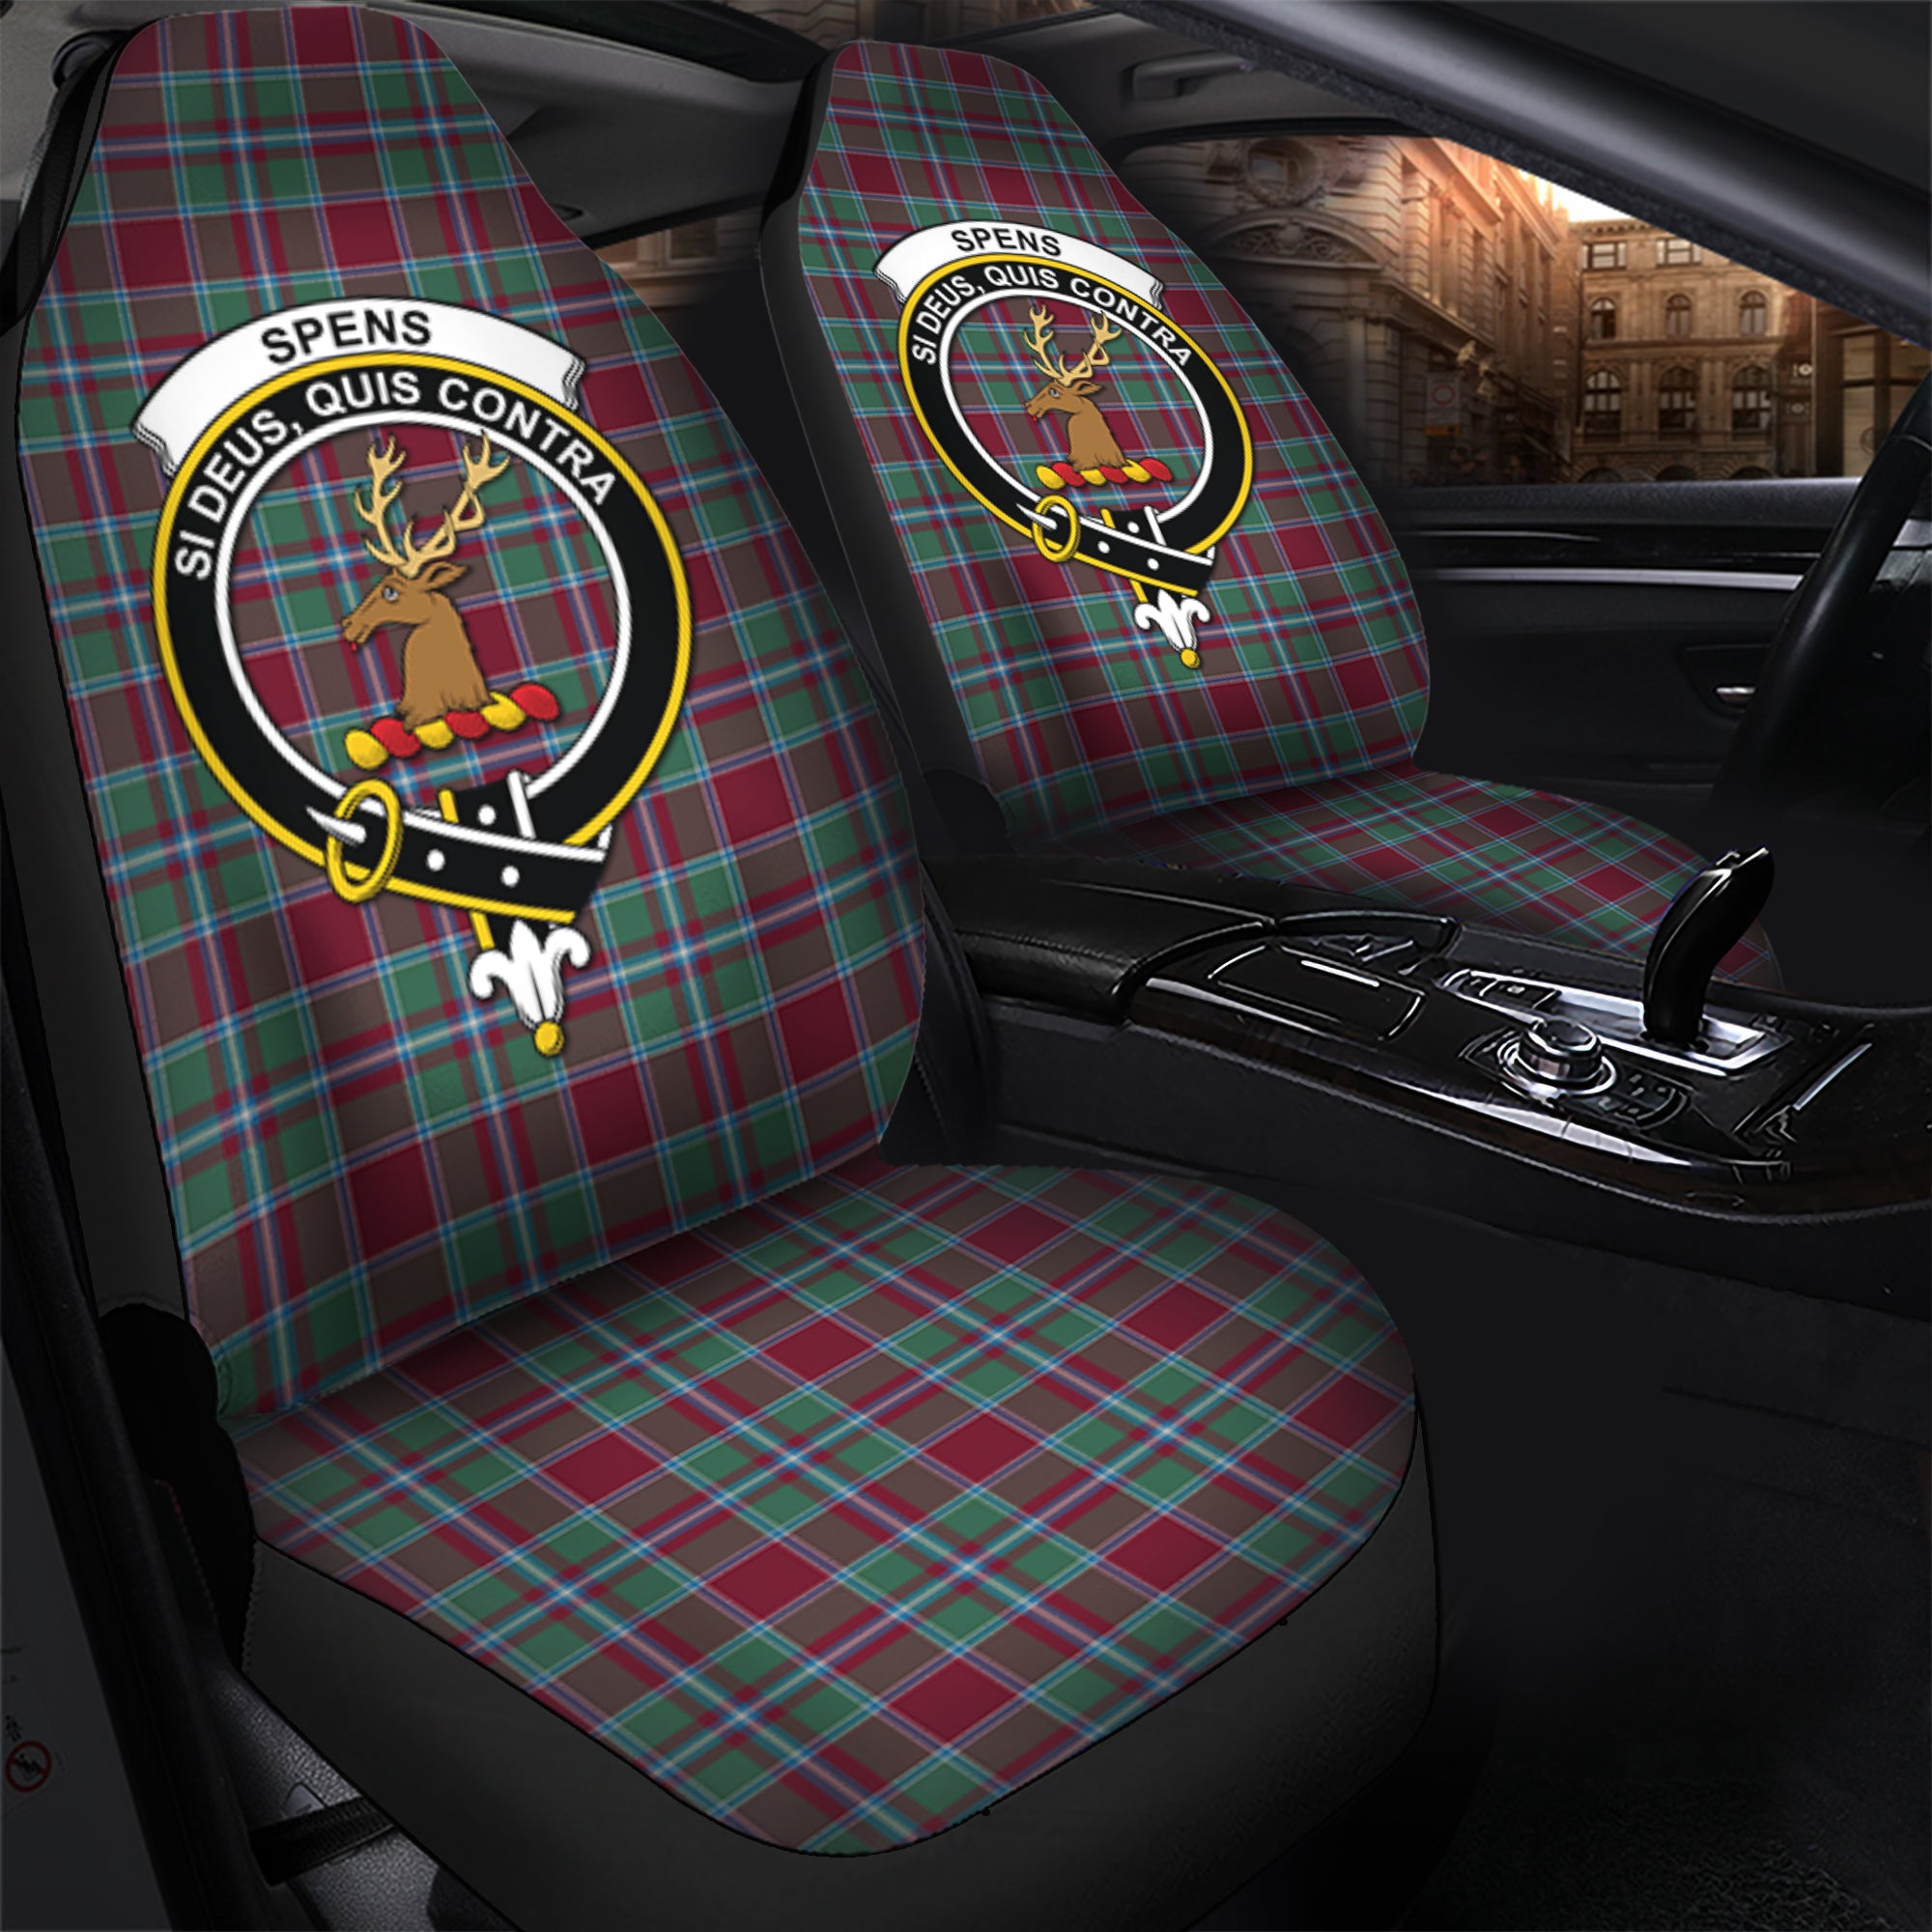 Spens (Spence) Clan Tartan Car Seat Cover, Family Crest Tartan Seat Cover TS23